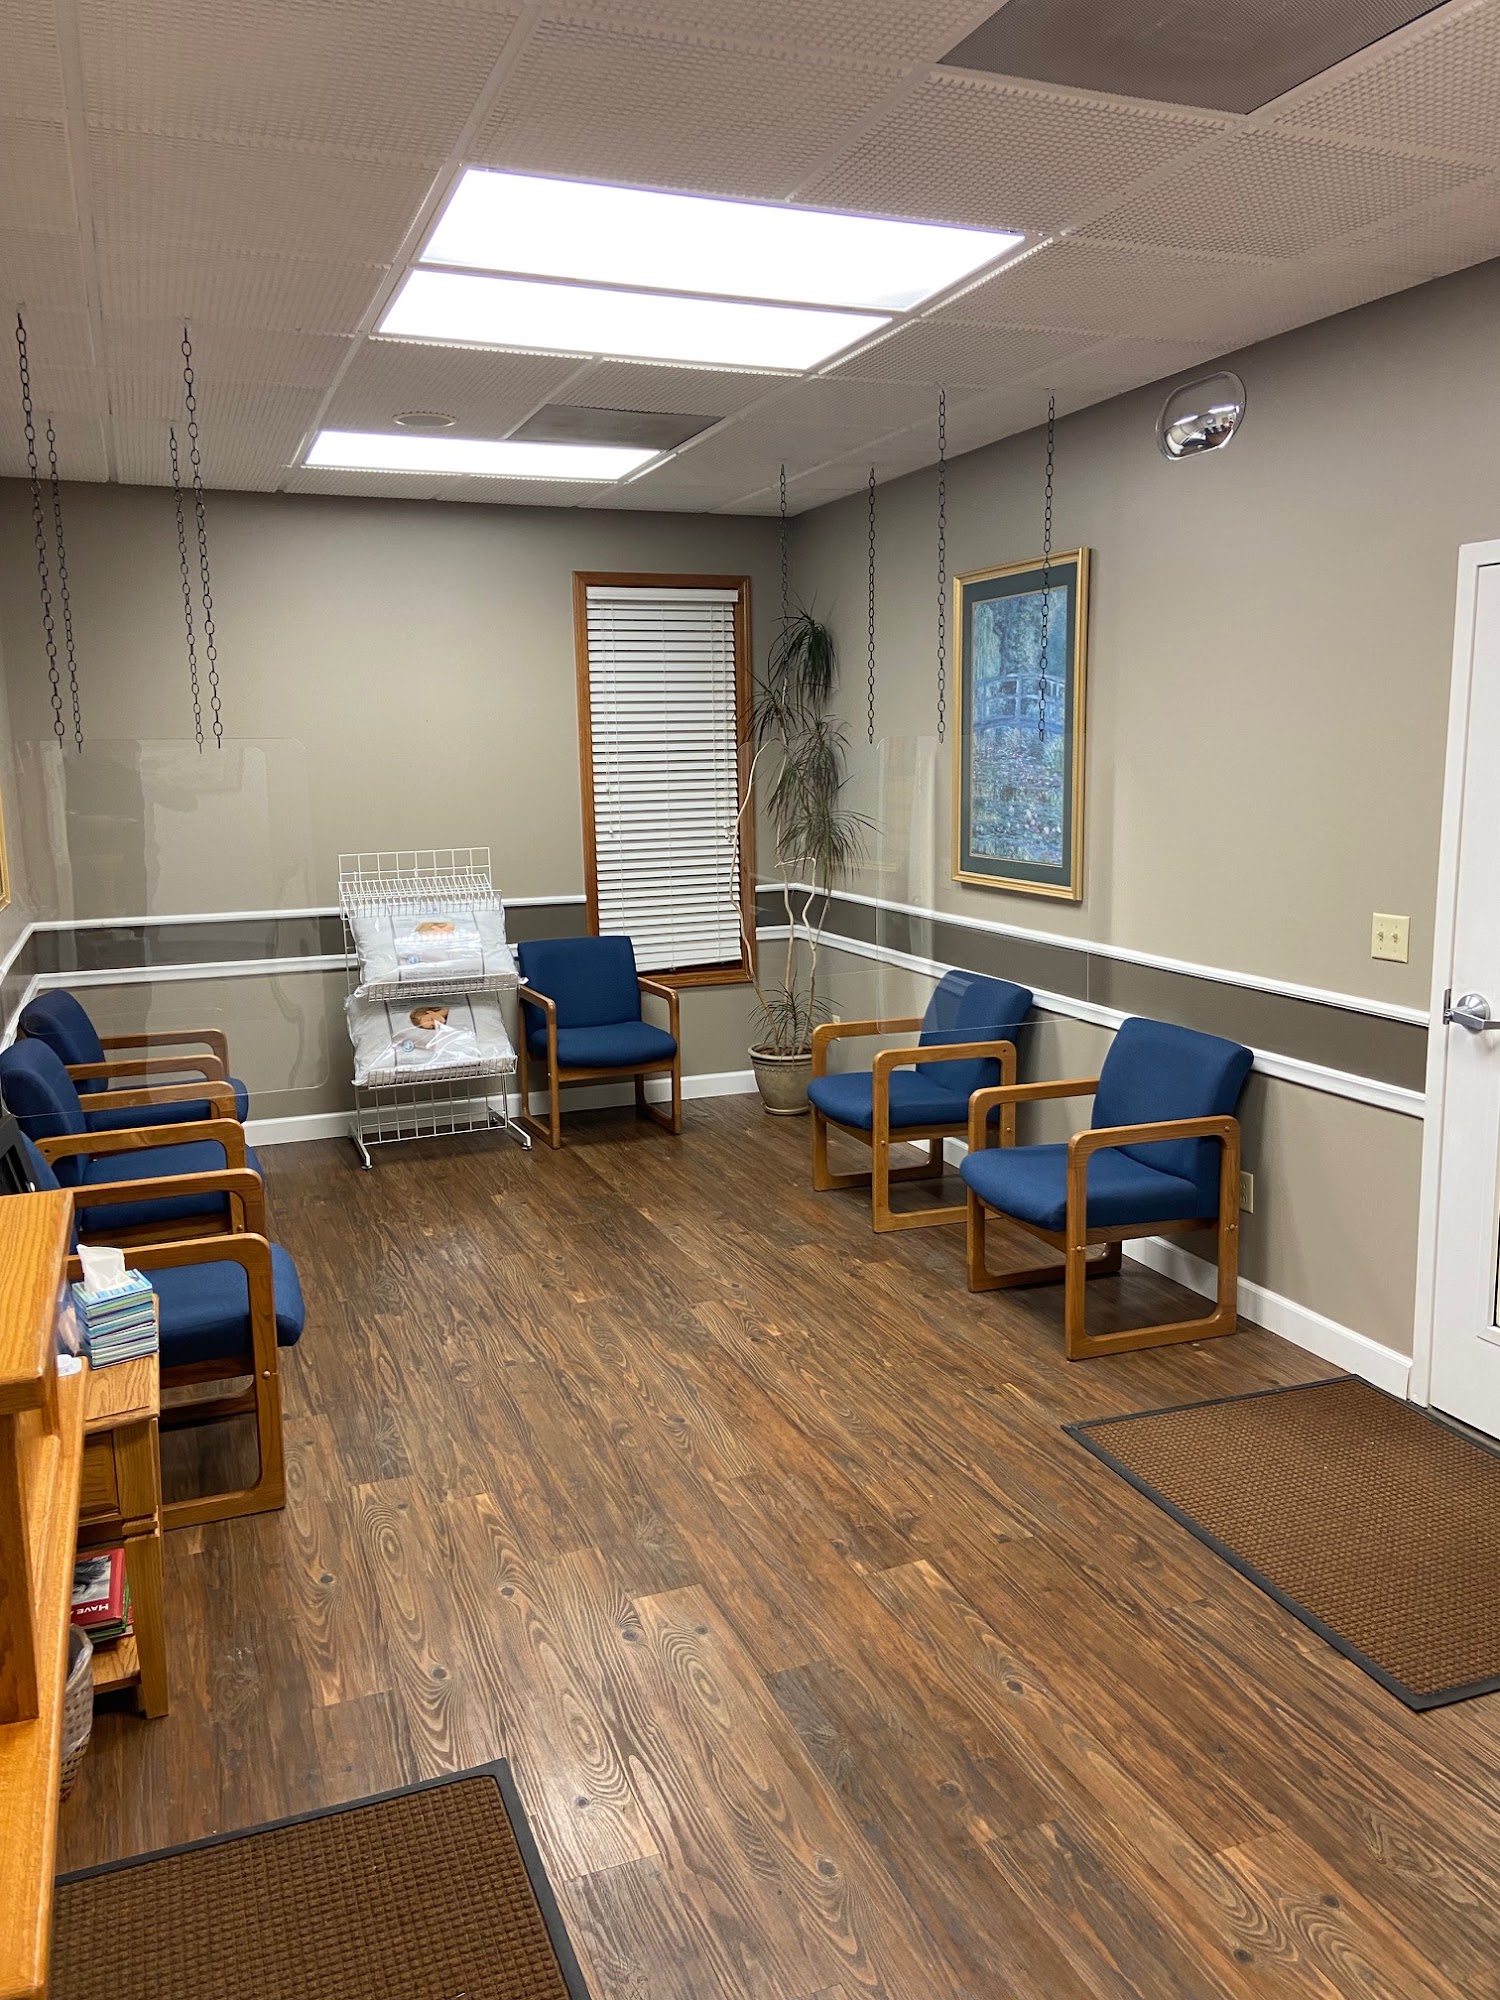 Premier Rehab: Chiropractic and Pain 4460 N Illinois St, Swansea Illinois 62226